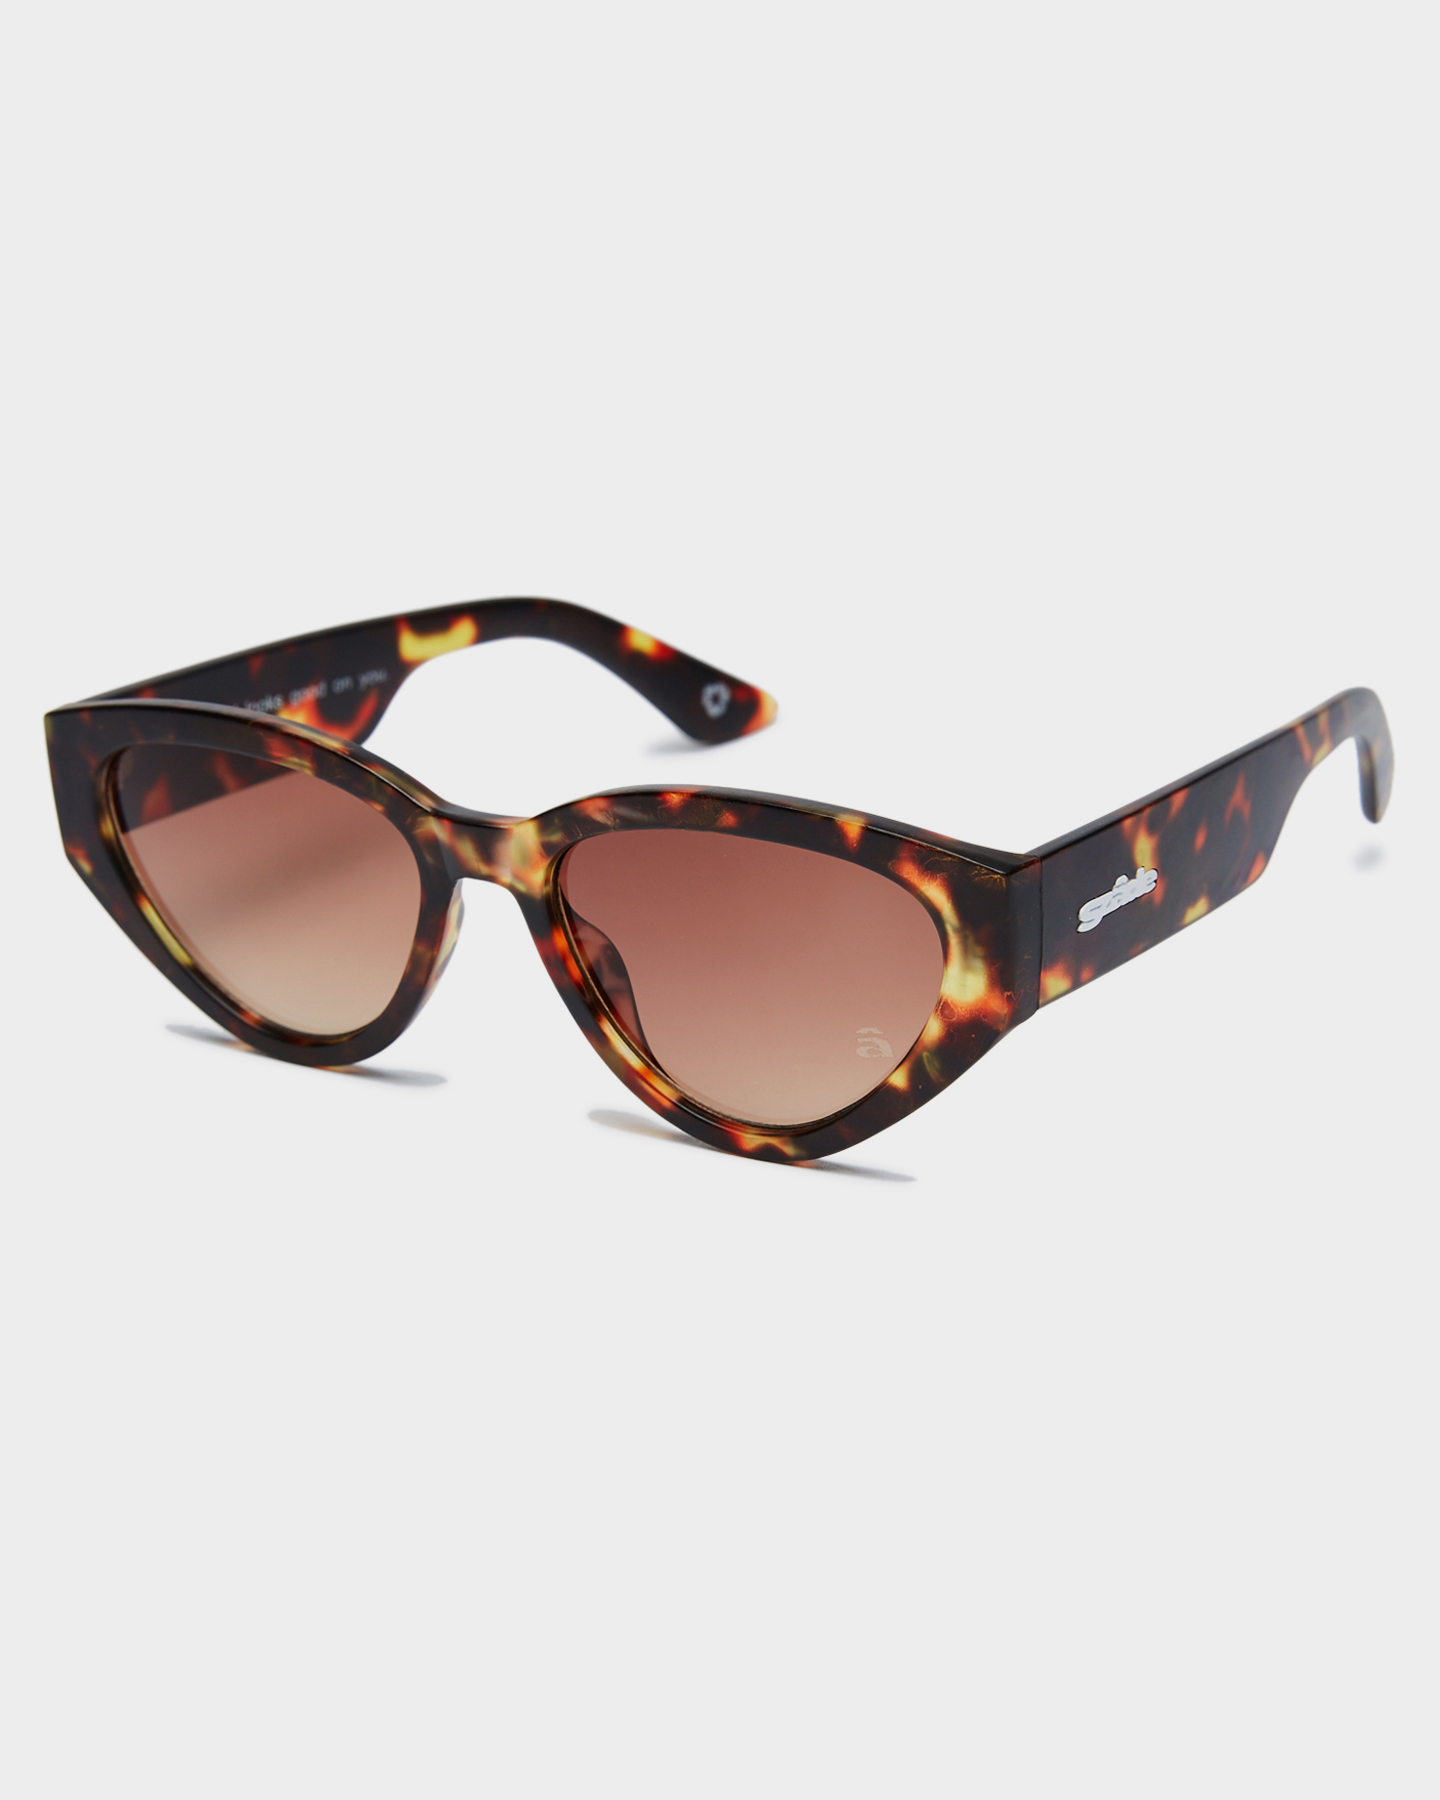 Szade Eyewear Kershaw Sunglasses - Spiced Chestnut Brwn | SurfStitch